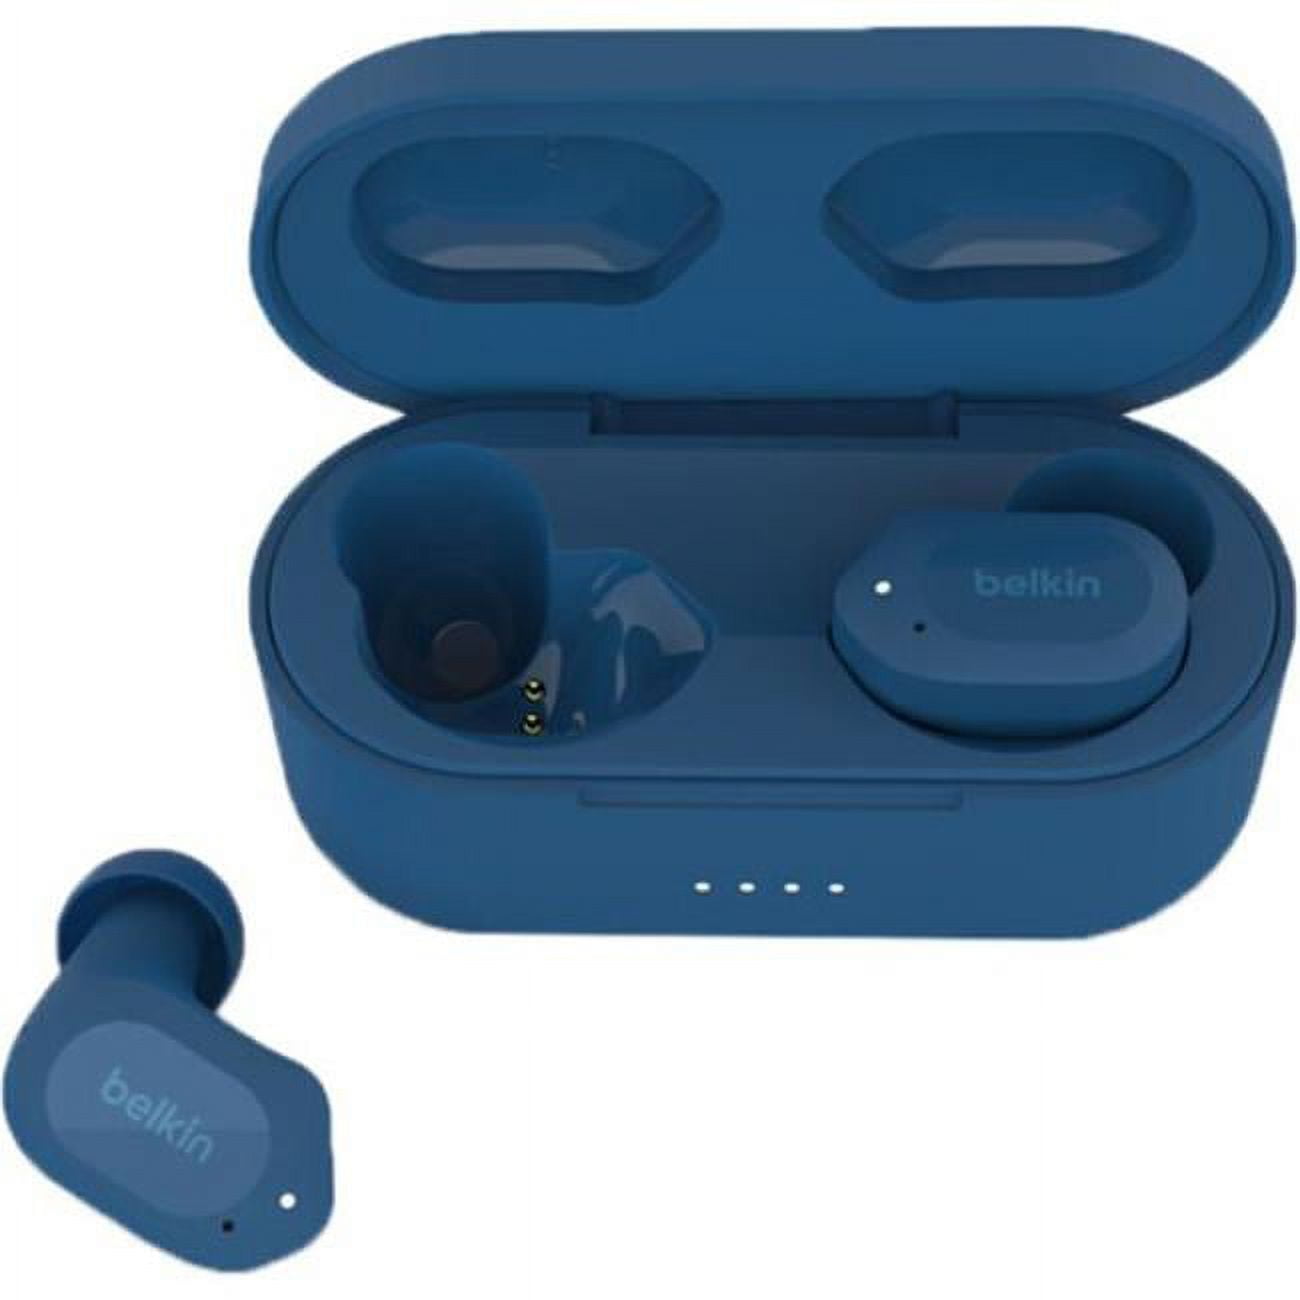 Belkin SOUNDFORM Play True Wireless Earbuds AUC005BTBK - Walmart.com